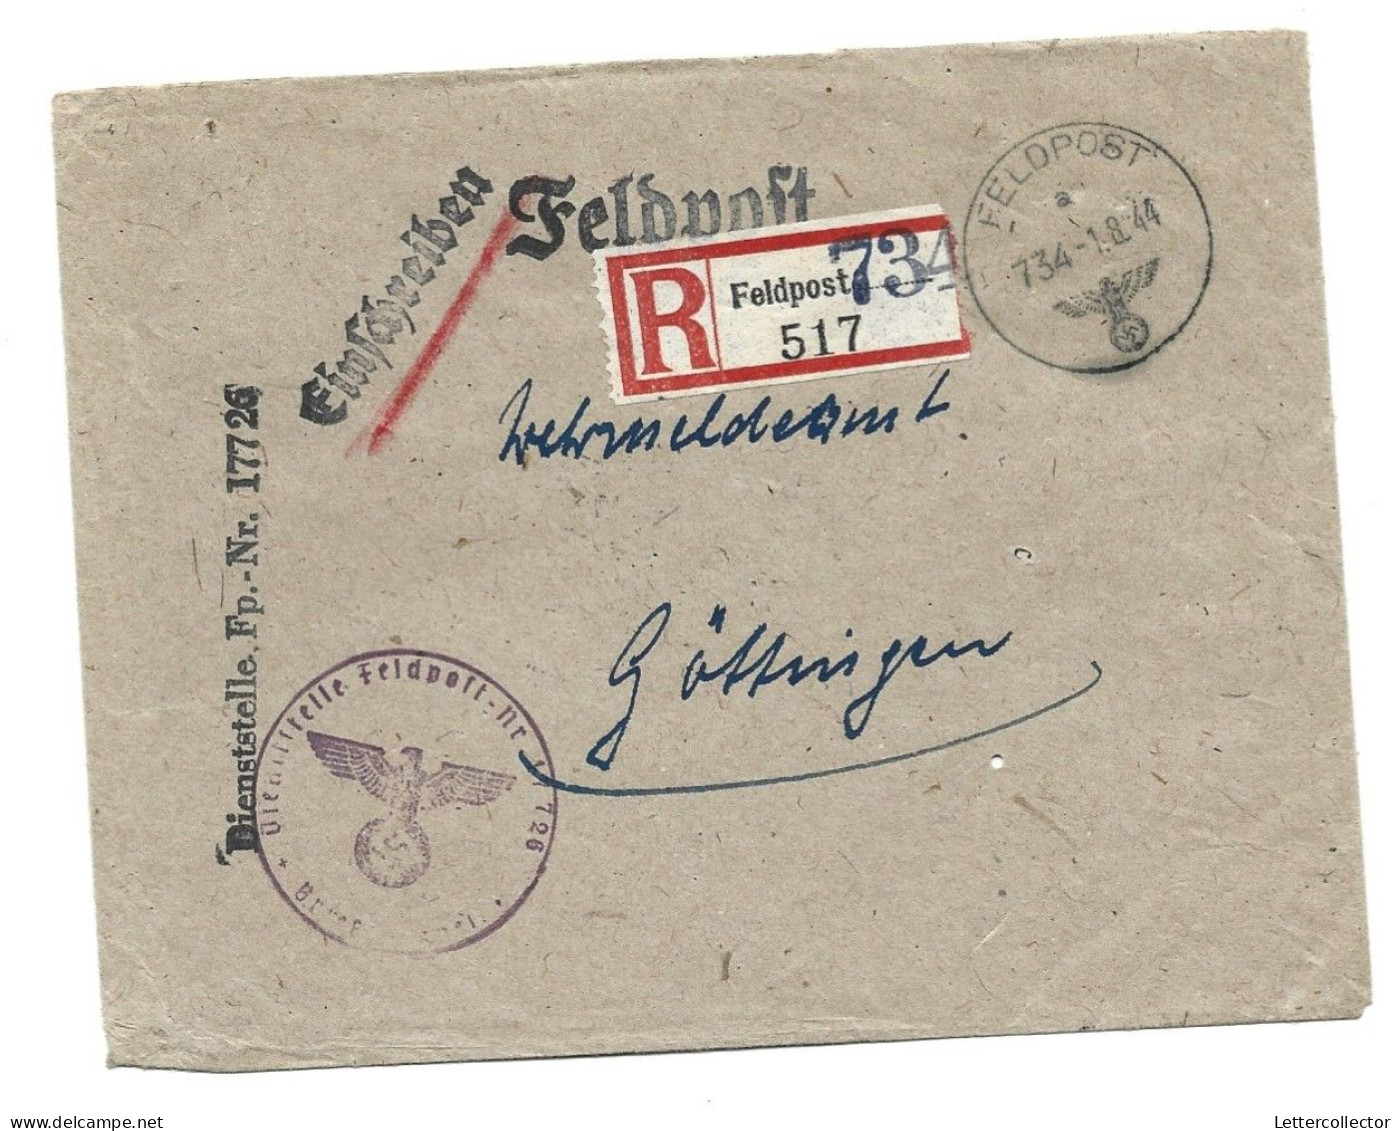 Feldpost Einschreiben Feldstrafgefangenenabteilung 9 Bewährung 1944 - Feldpost World War II